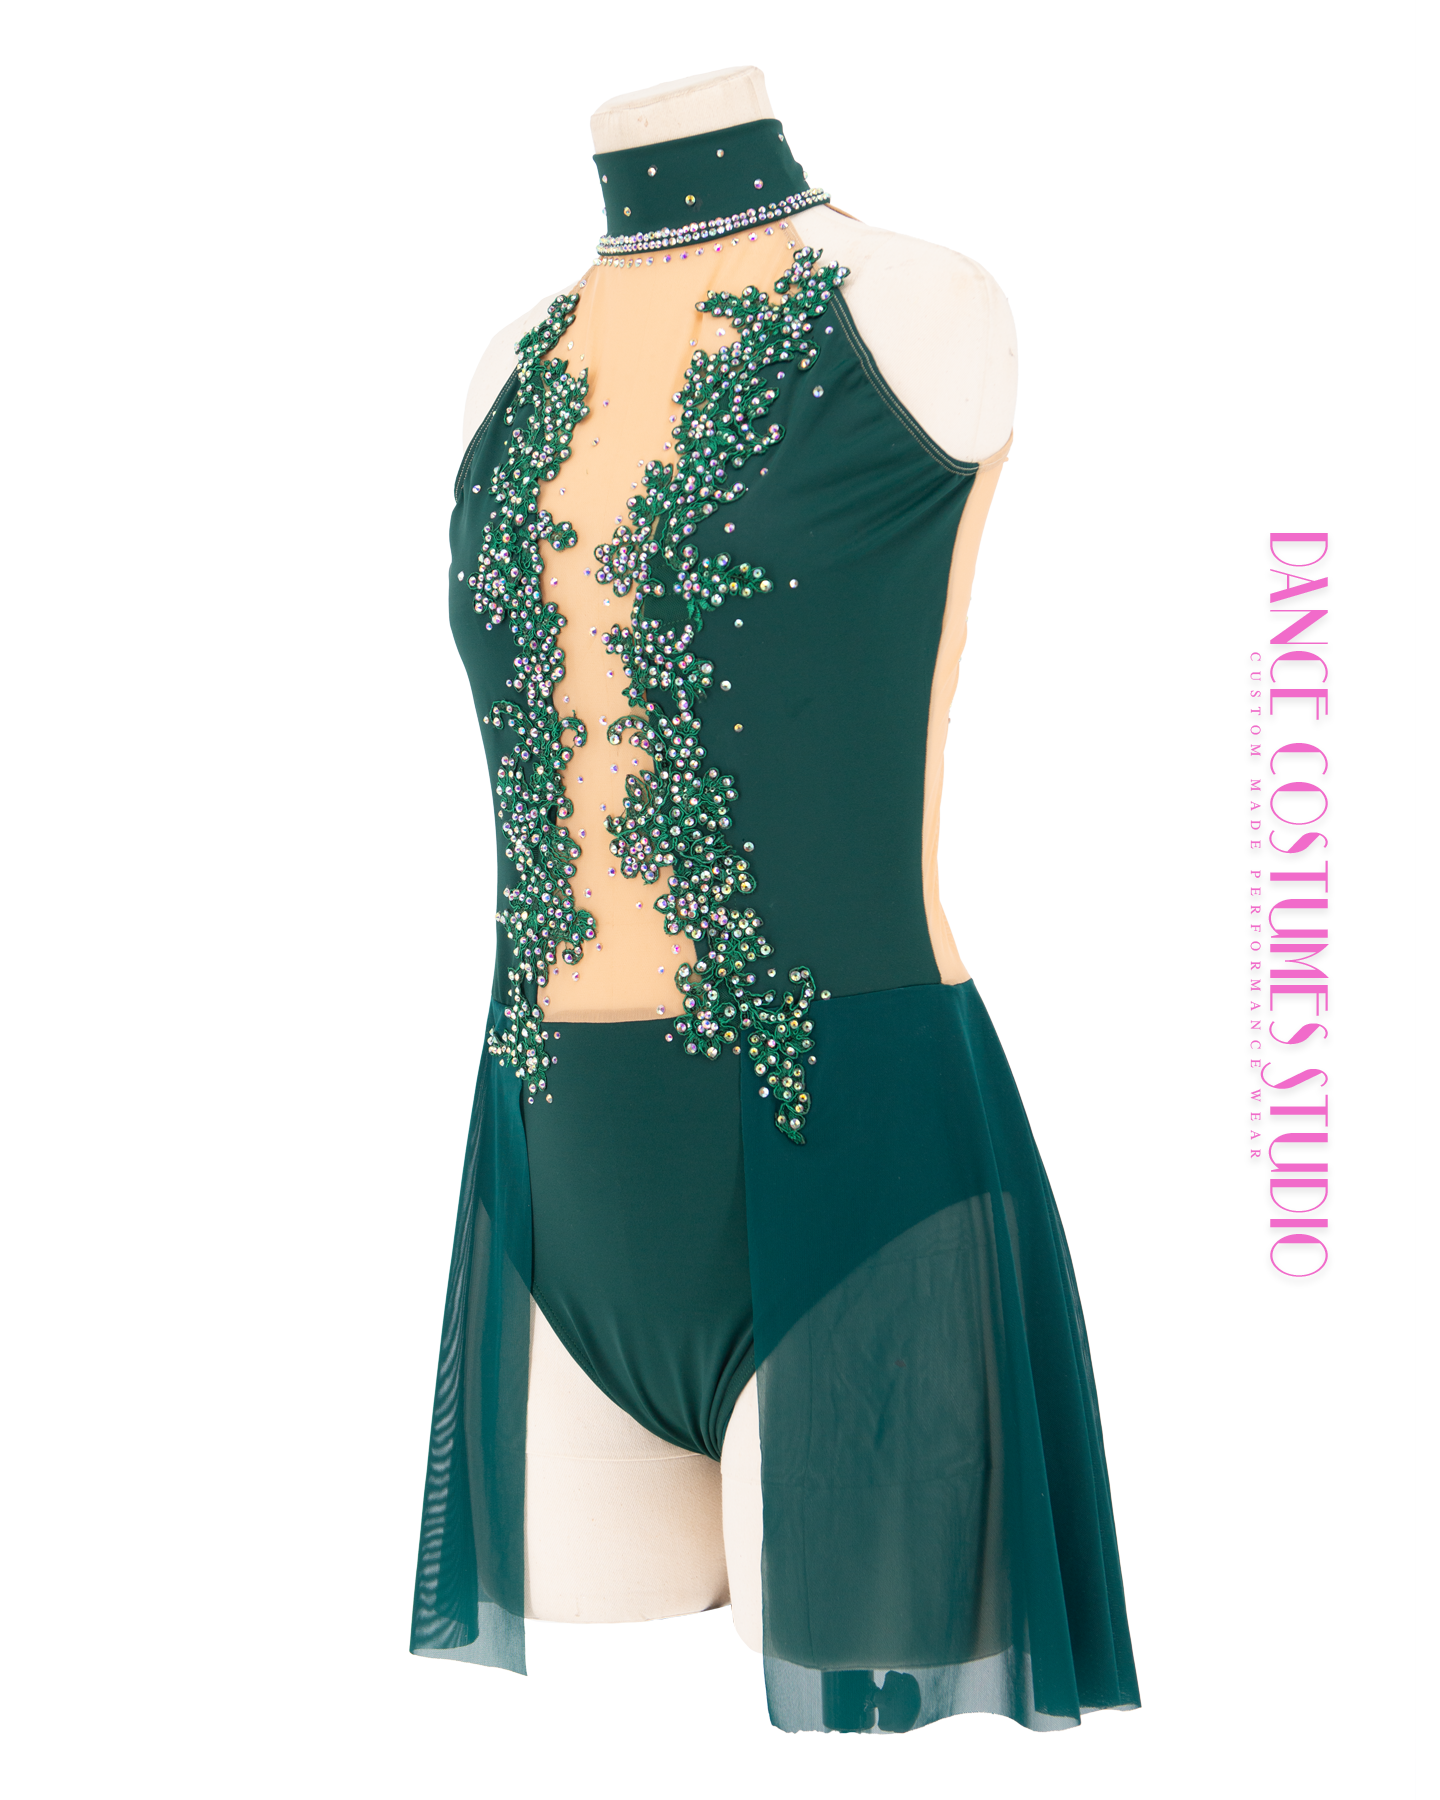 Adrianna Lyrical Dance Costume